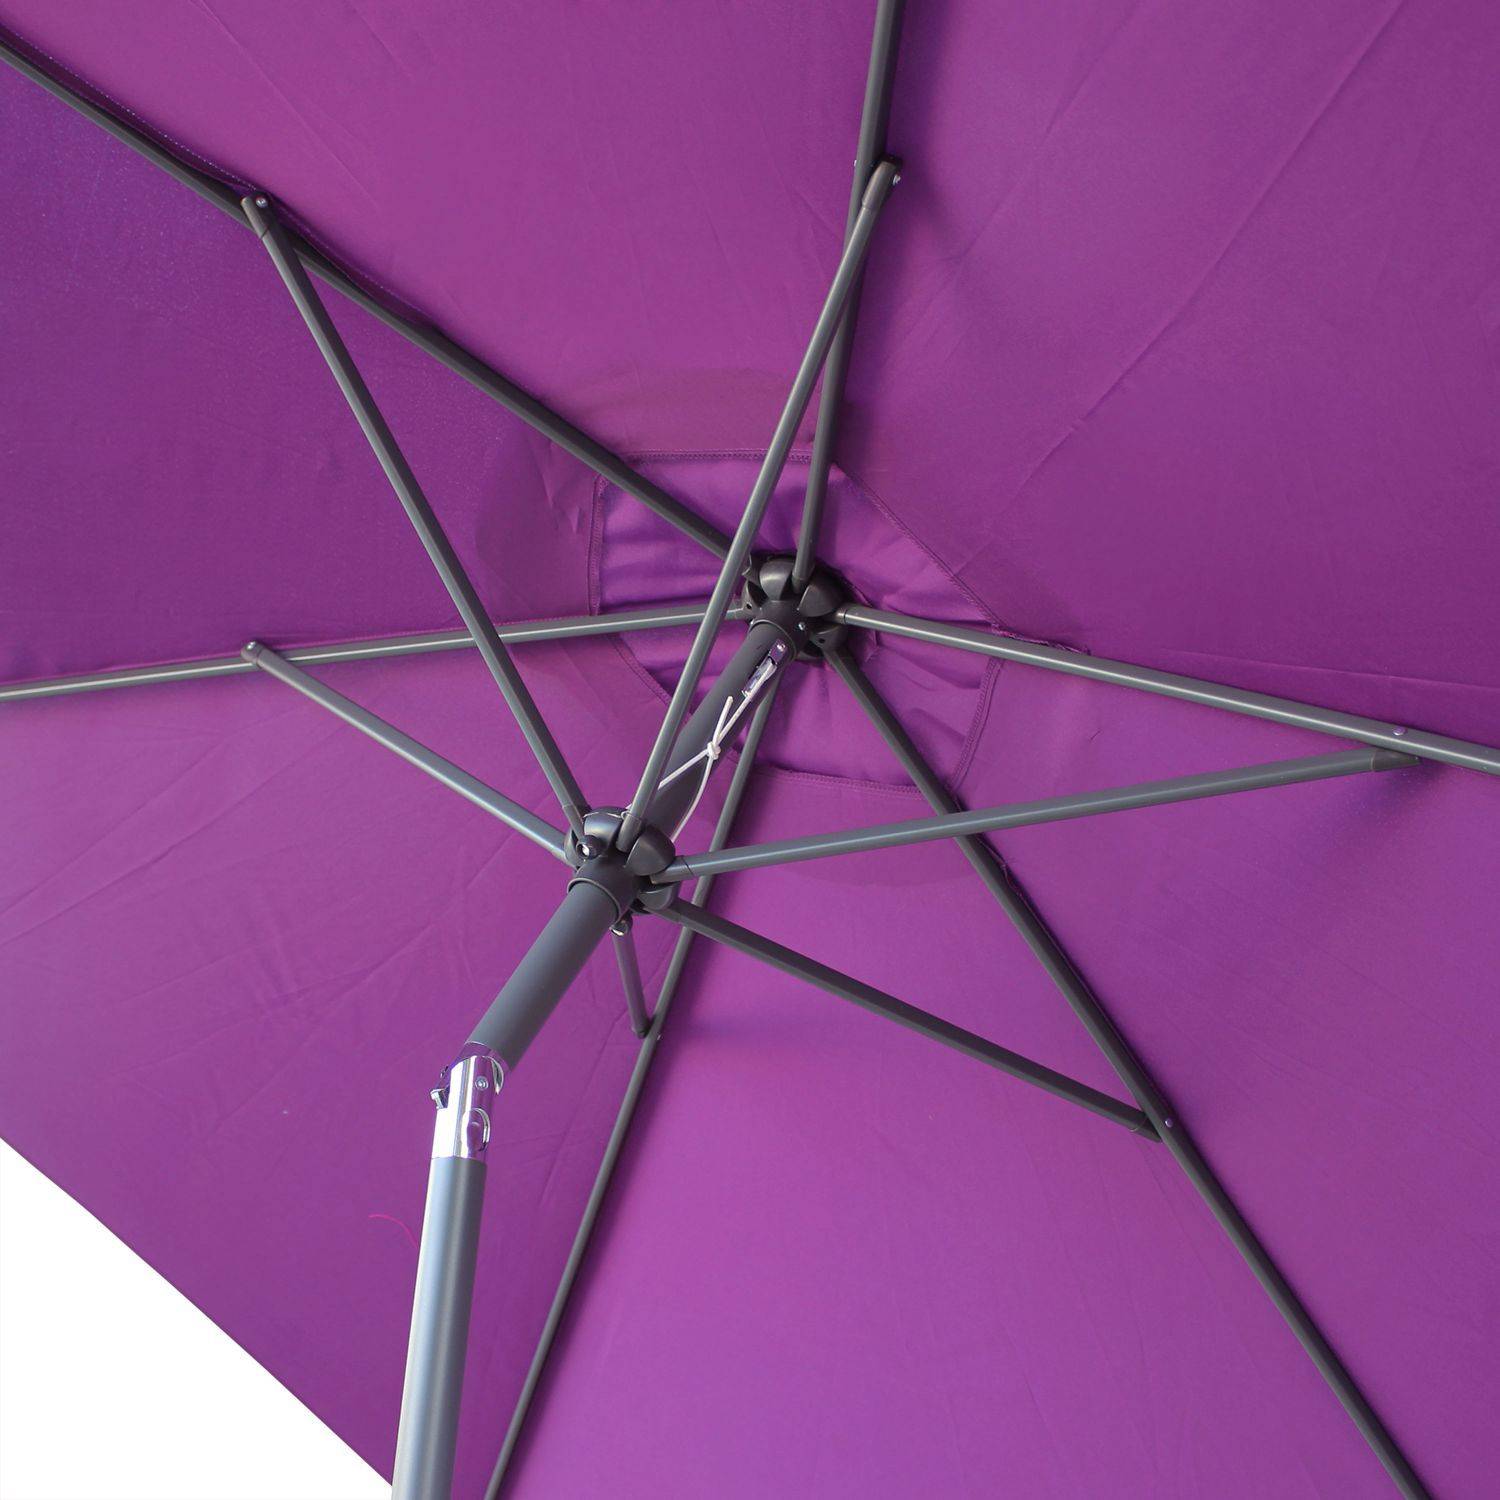 Sombrilla jardín, parasol morado, mástil central, inclinable, redondo, Ø300 cm, Touquet,sweeek,Photo6